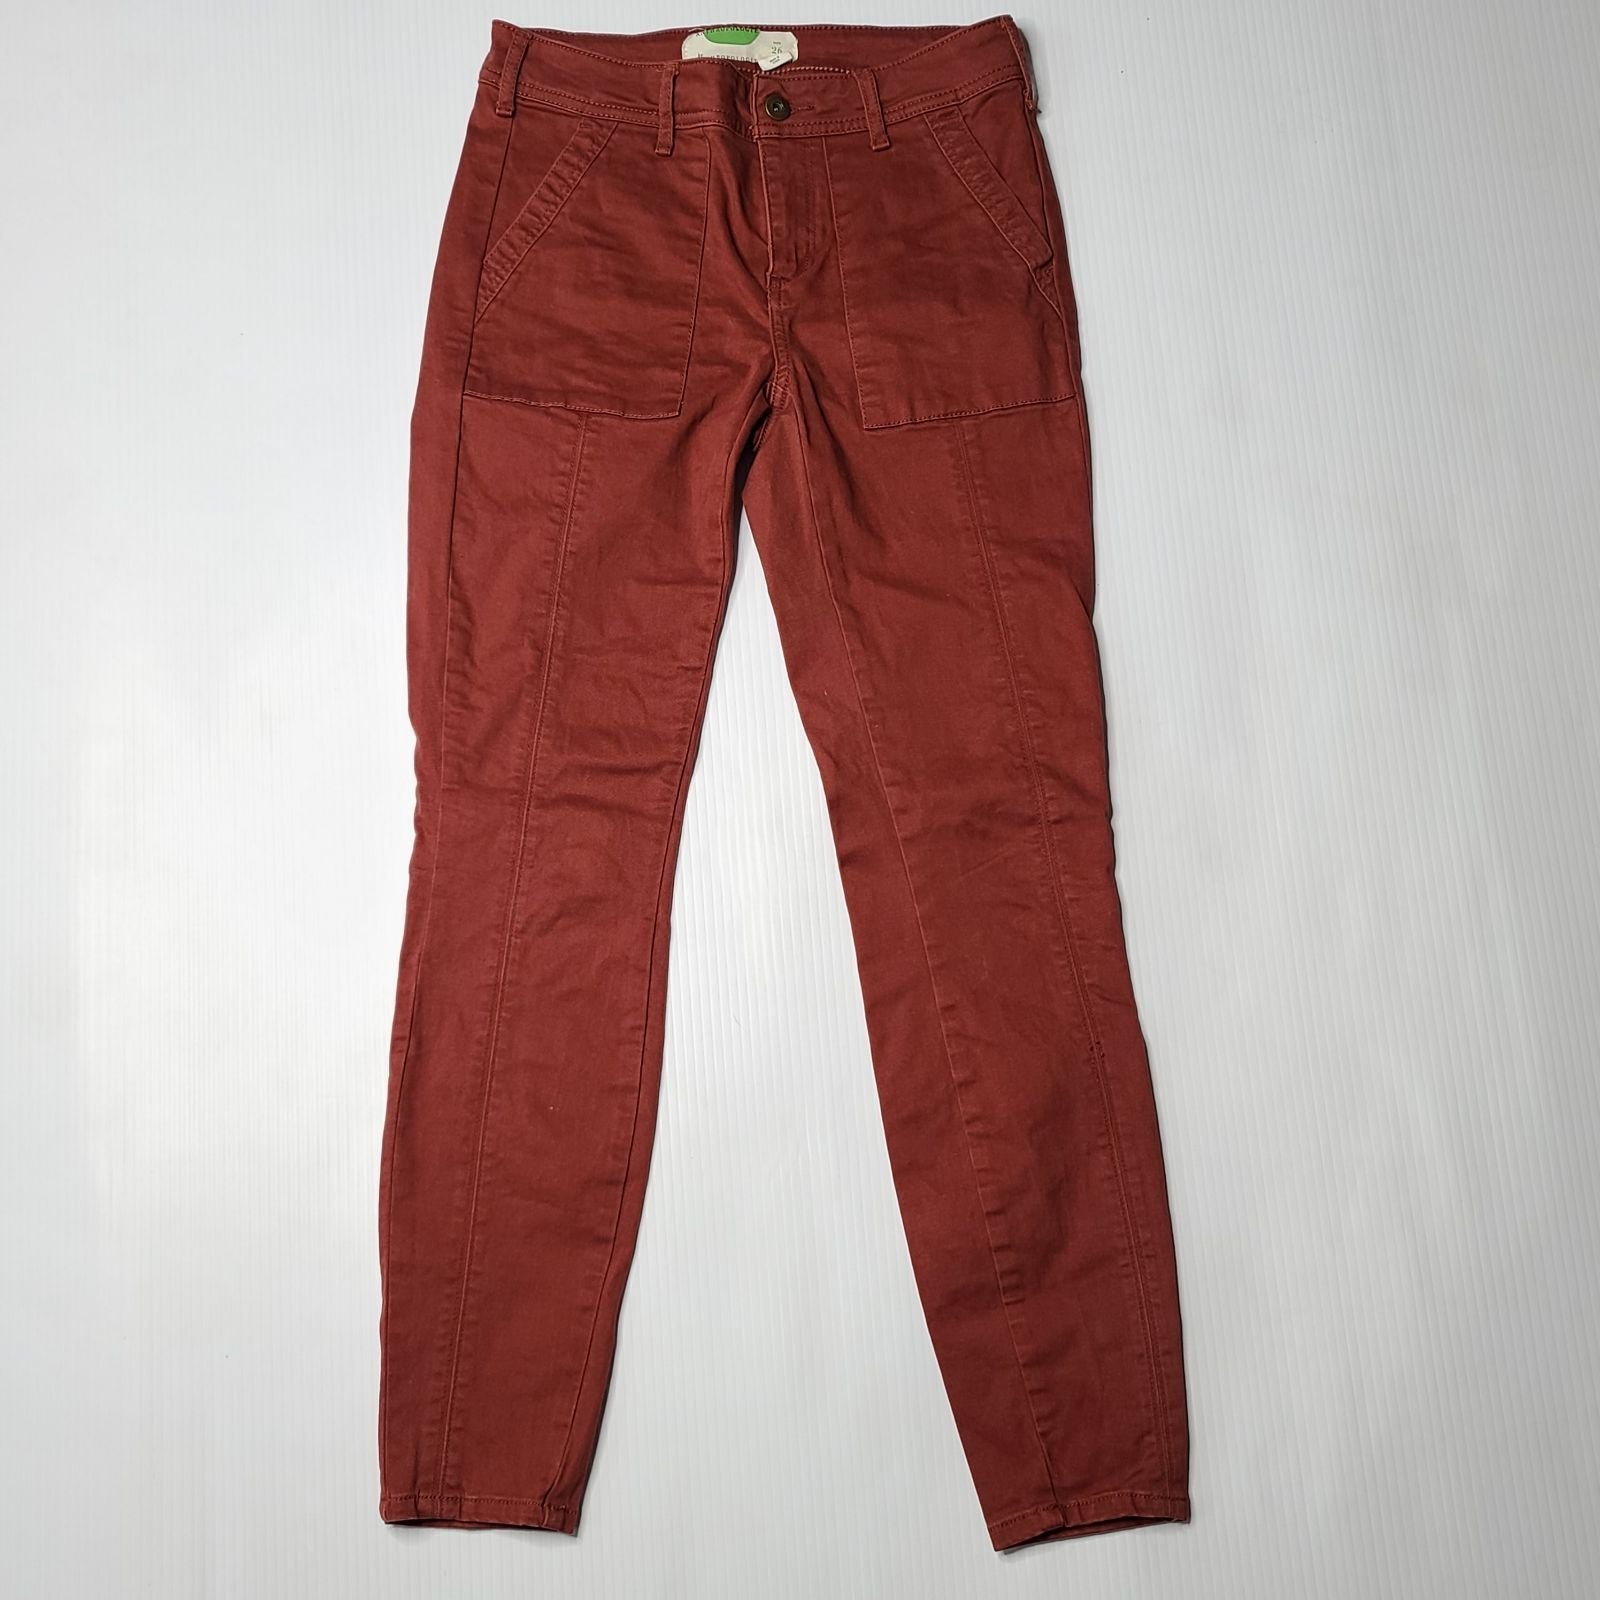 Latest  Anthropologie 26 Burnt Red Skinny Jeans ouXpjFa